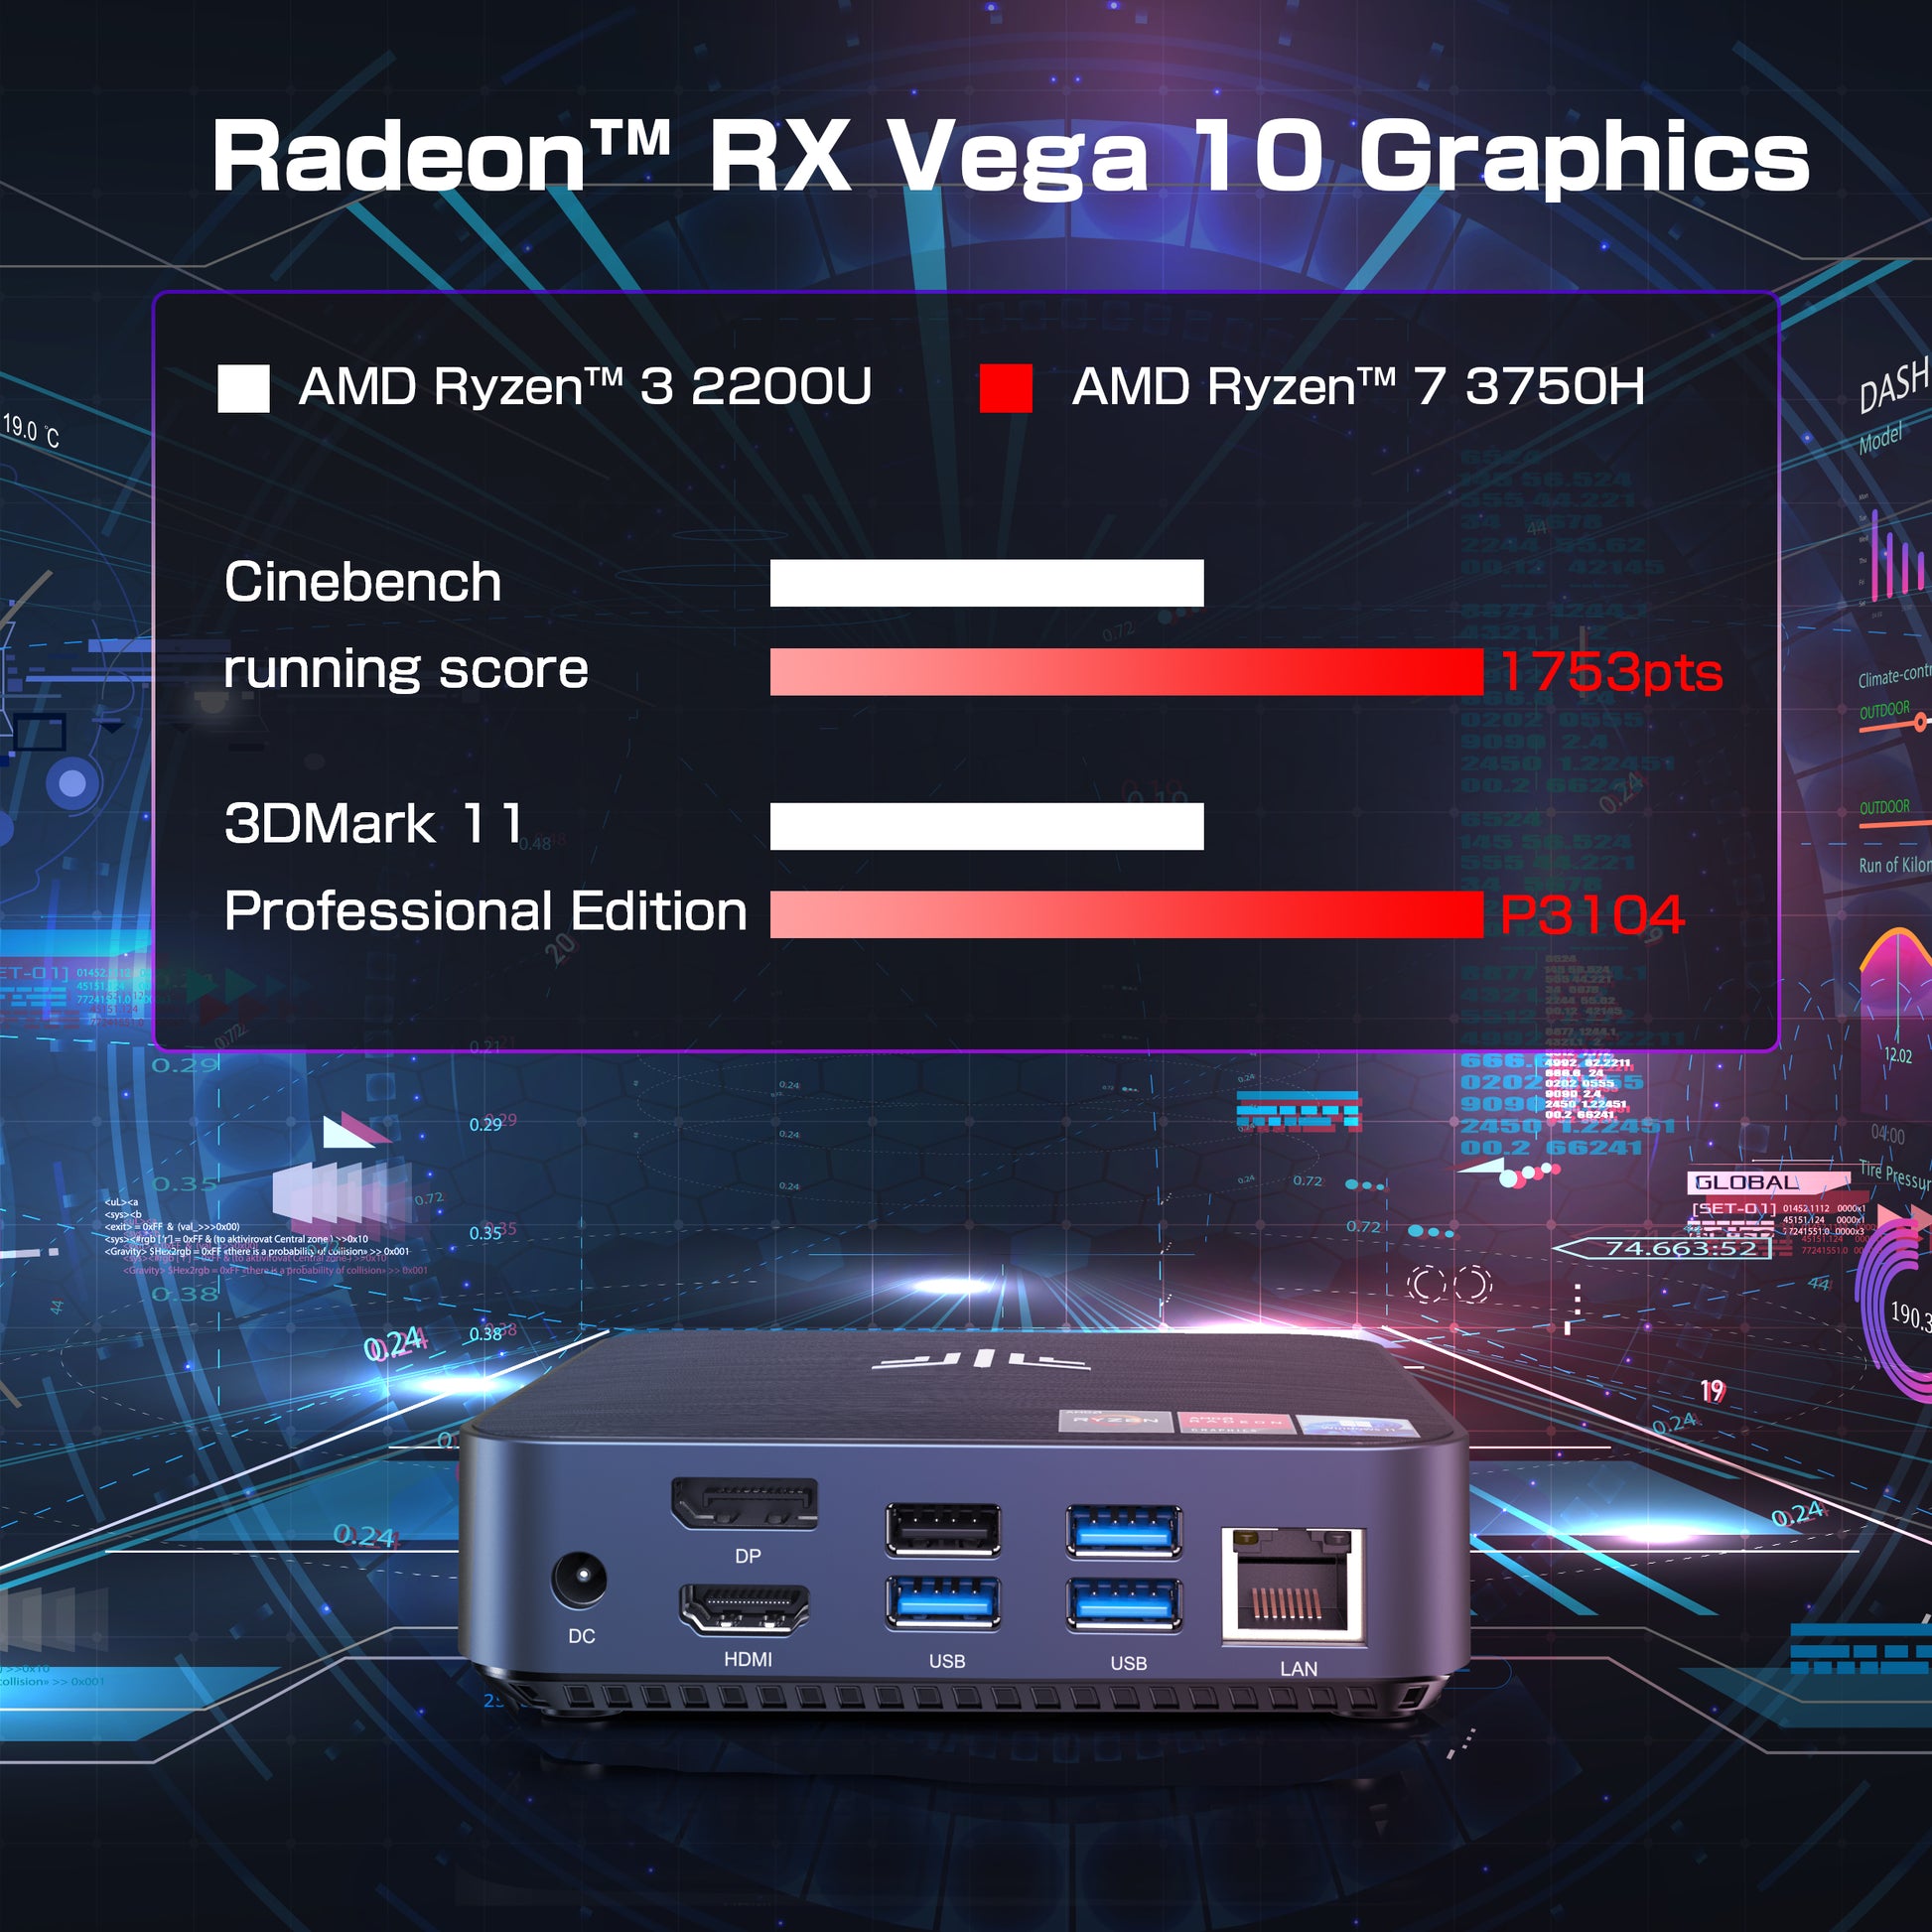 KAMRUI AMD Ryzen 7 3750H Mini PC